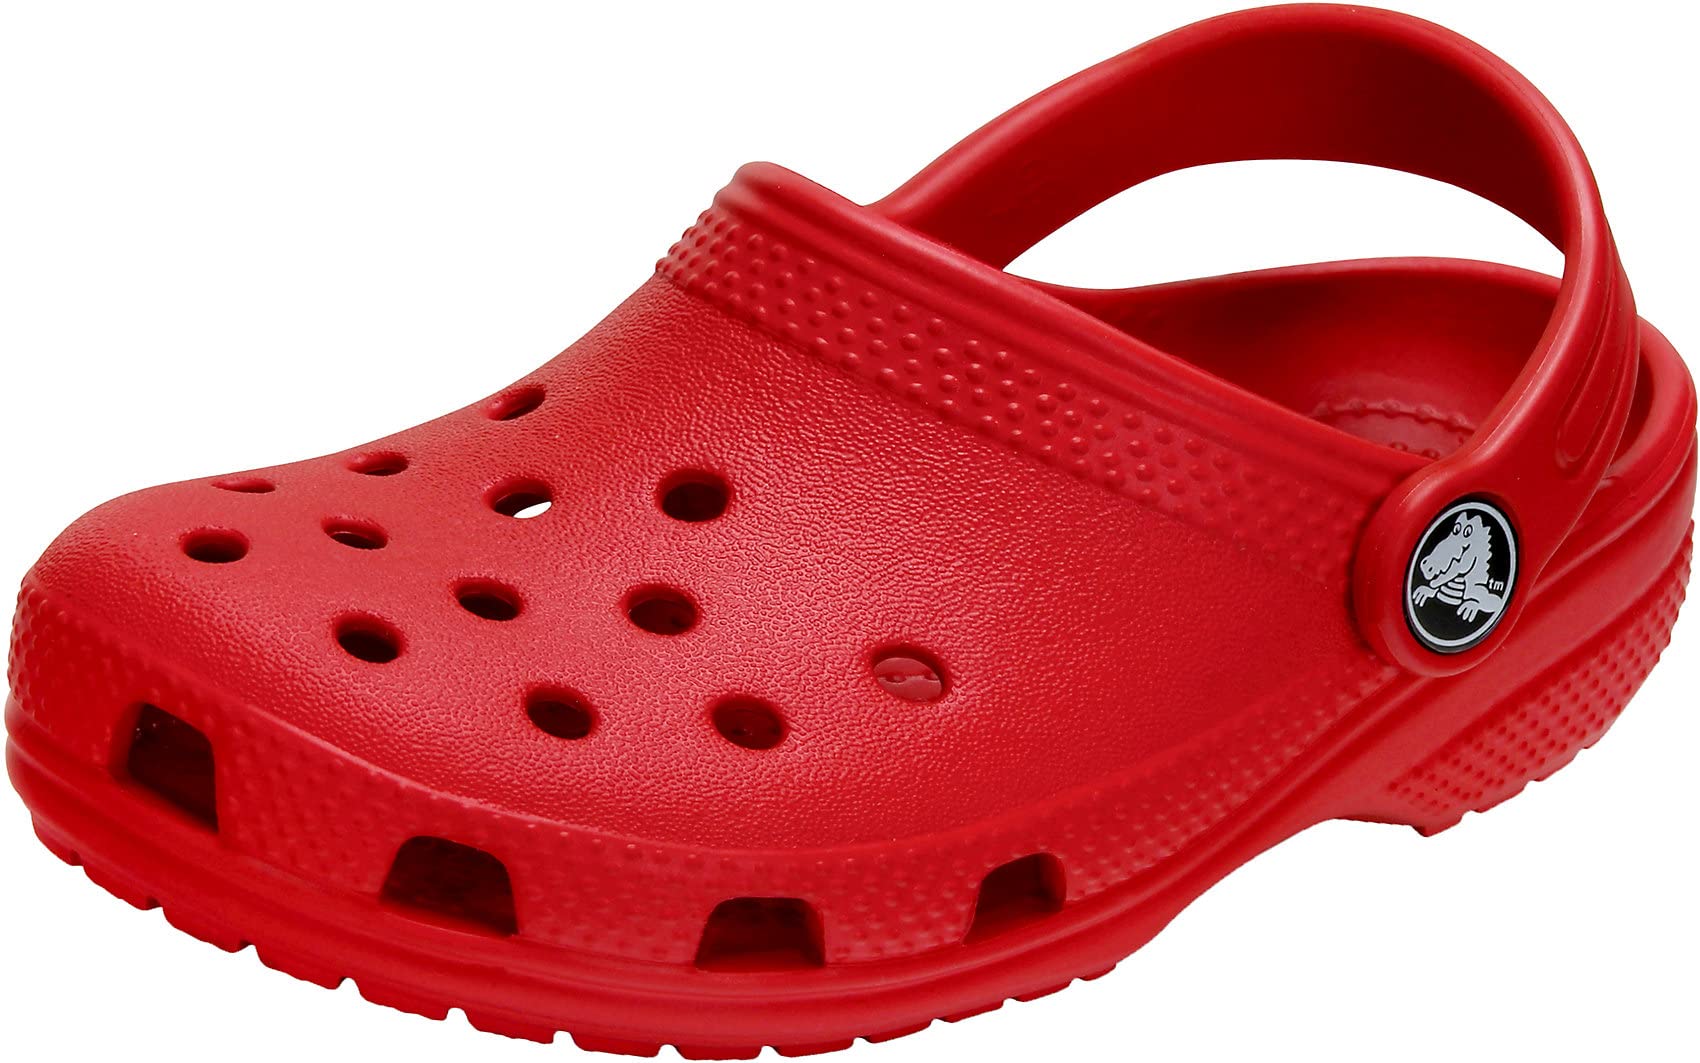 Crocs Unisex-Child Classic Clogs, Pepper, 9 Toddler